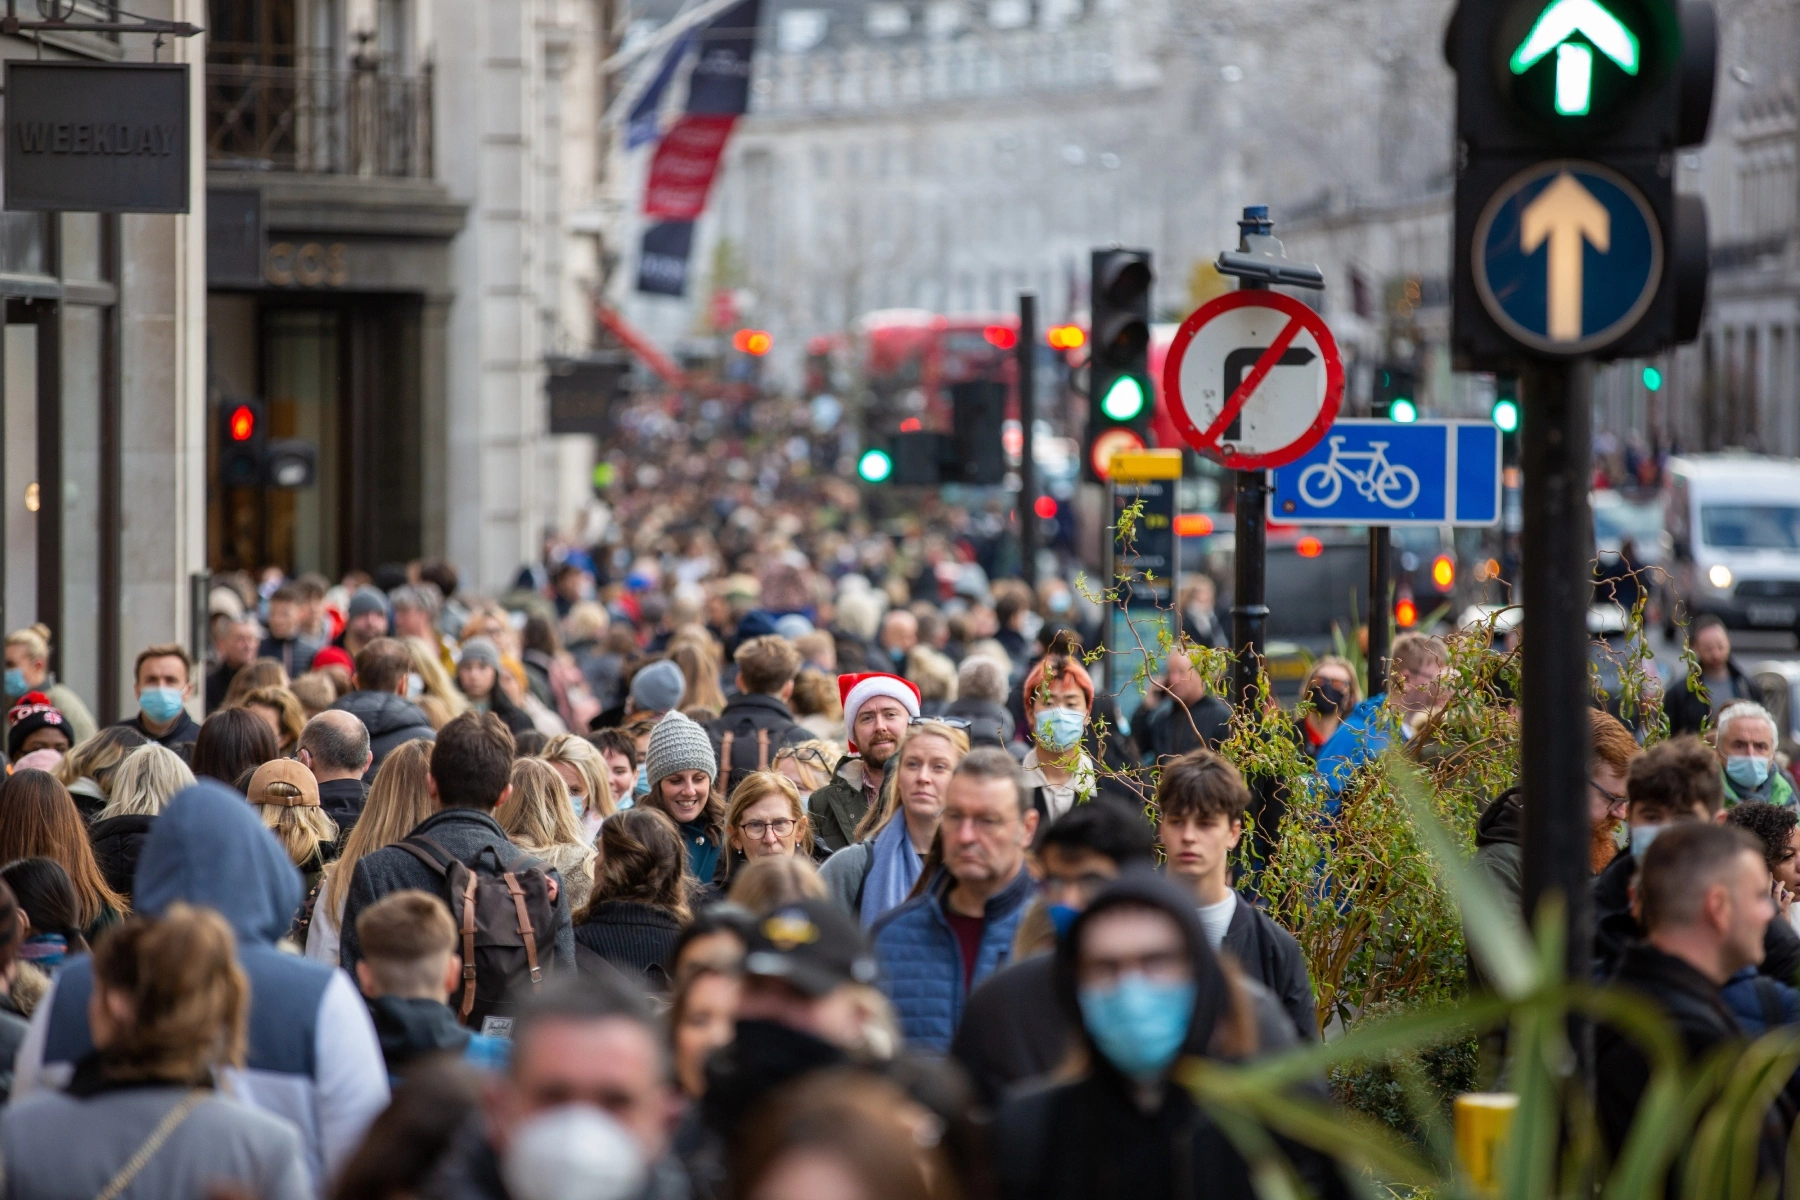 Crowds of people walk down Regent Street in wintertime